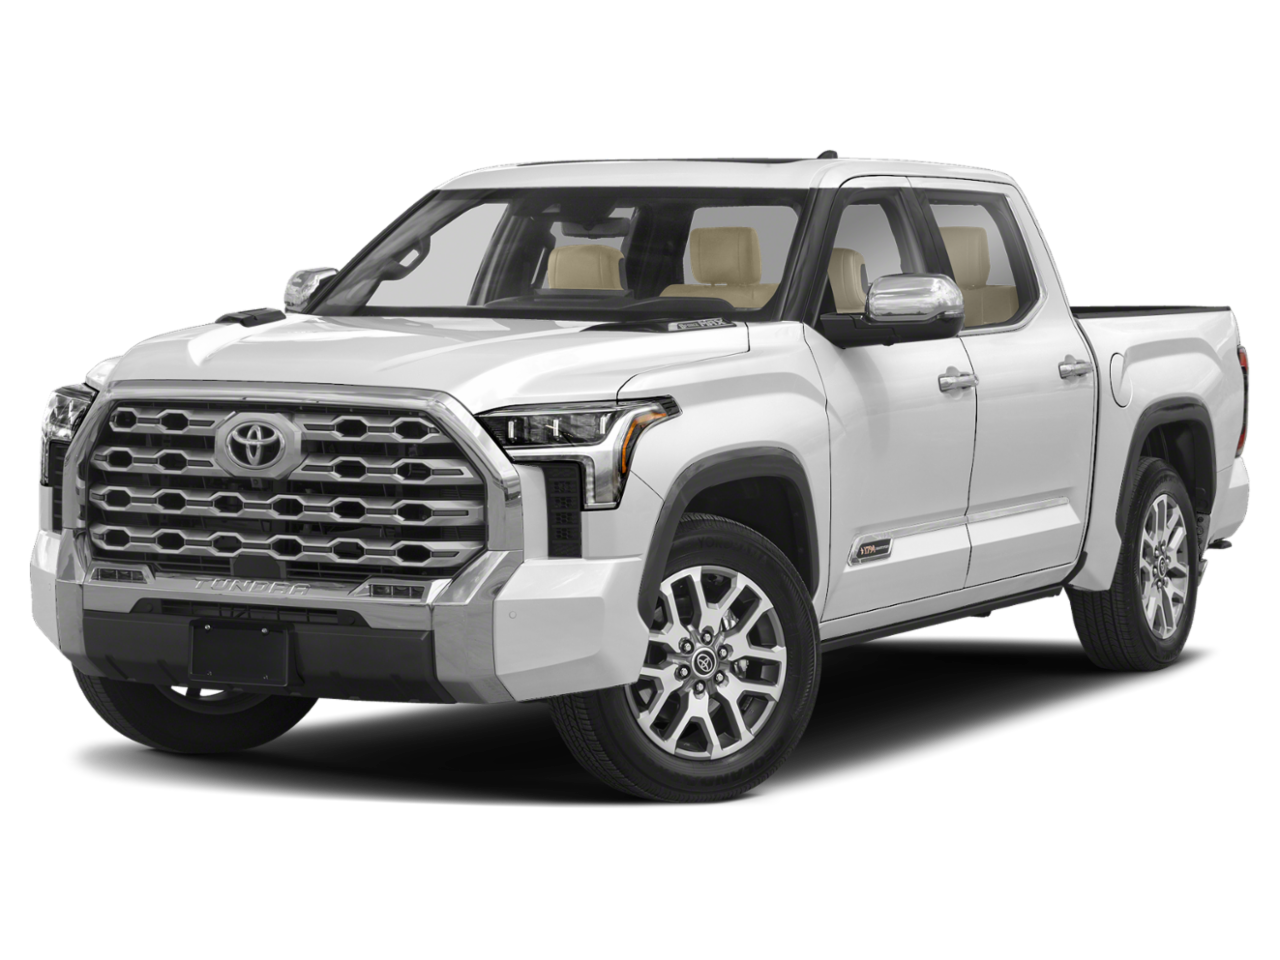 New Toyota Tundra 4WD from your Oshkosh, WI dealership, Bergstrom of